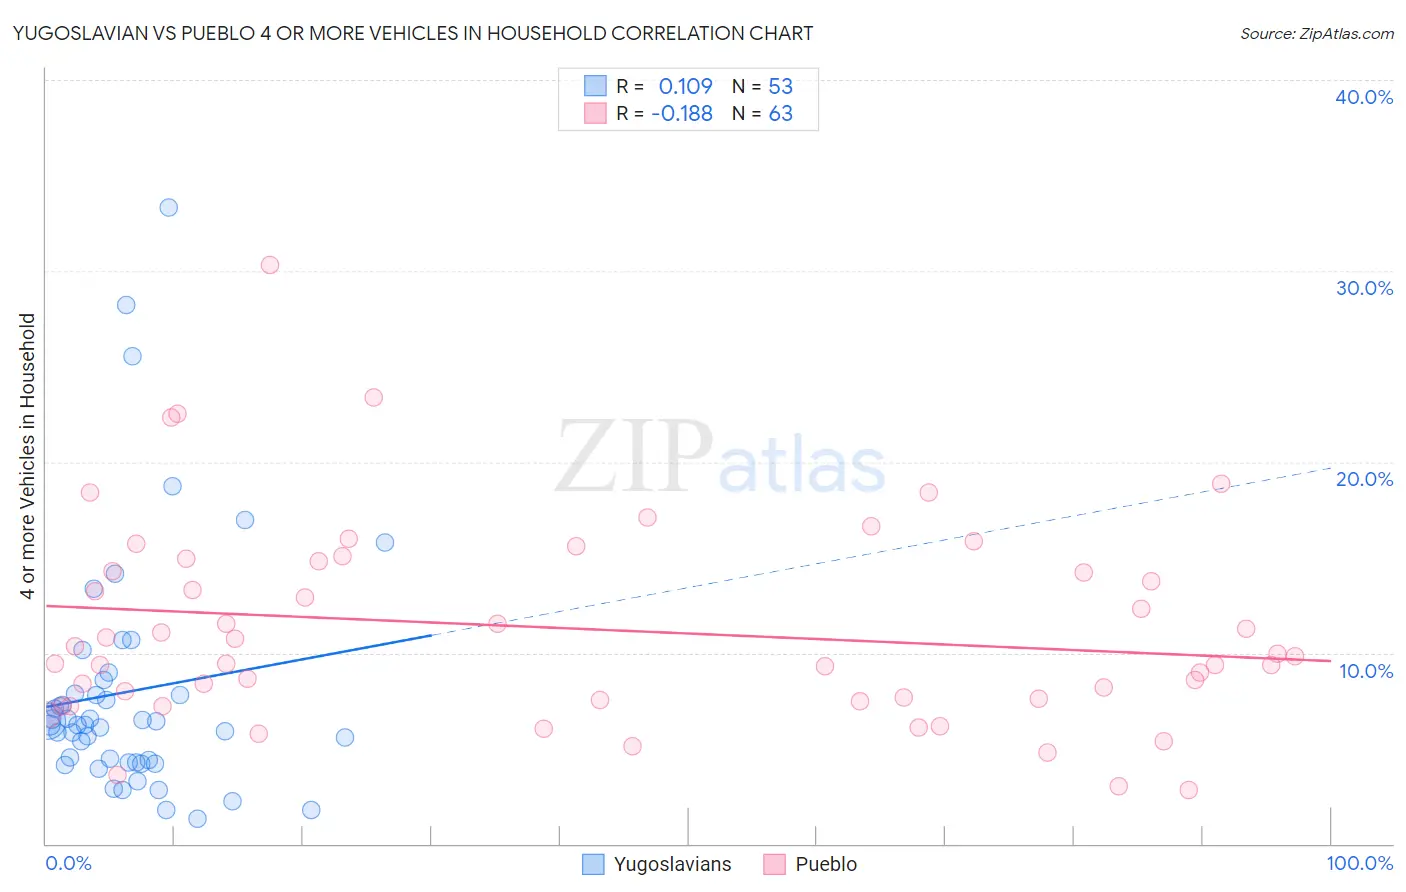 Yugoslavian vs Pueblo 4 or more Vehicles in Household